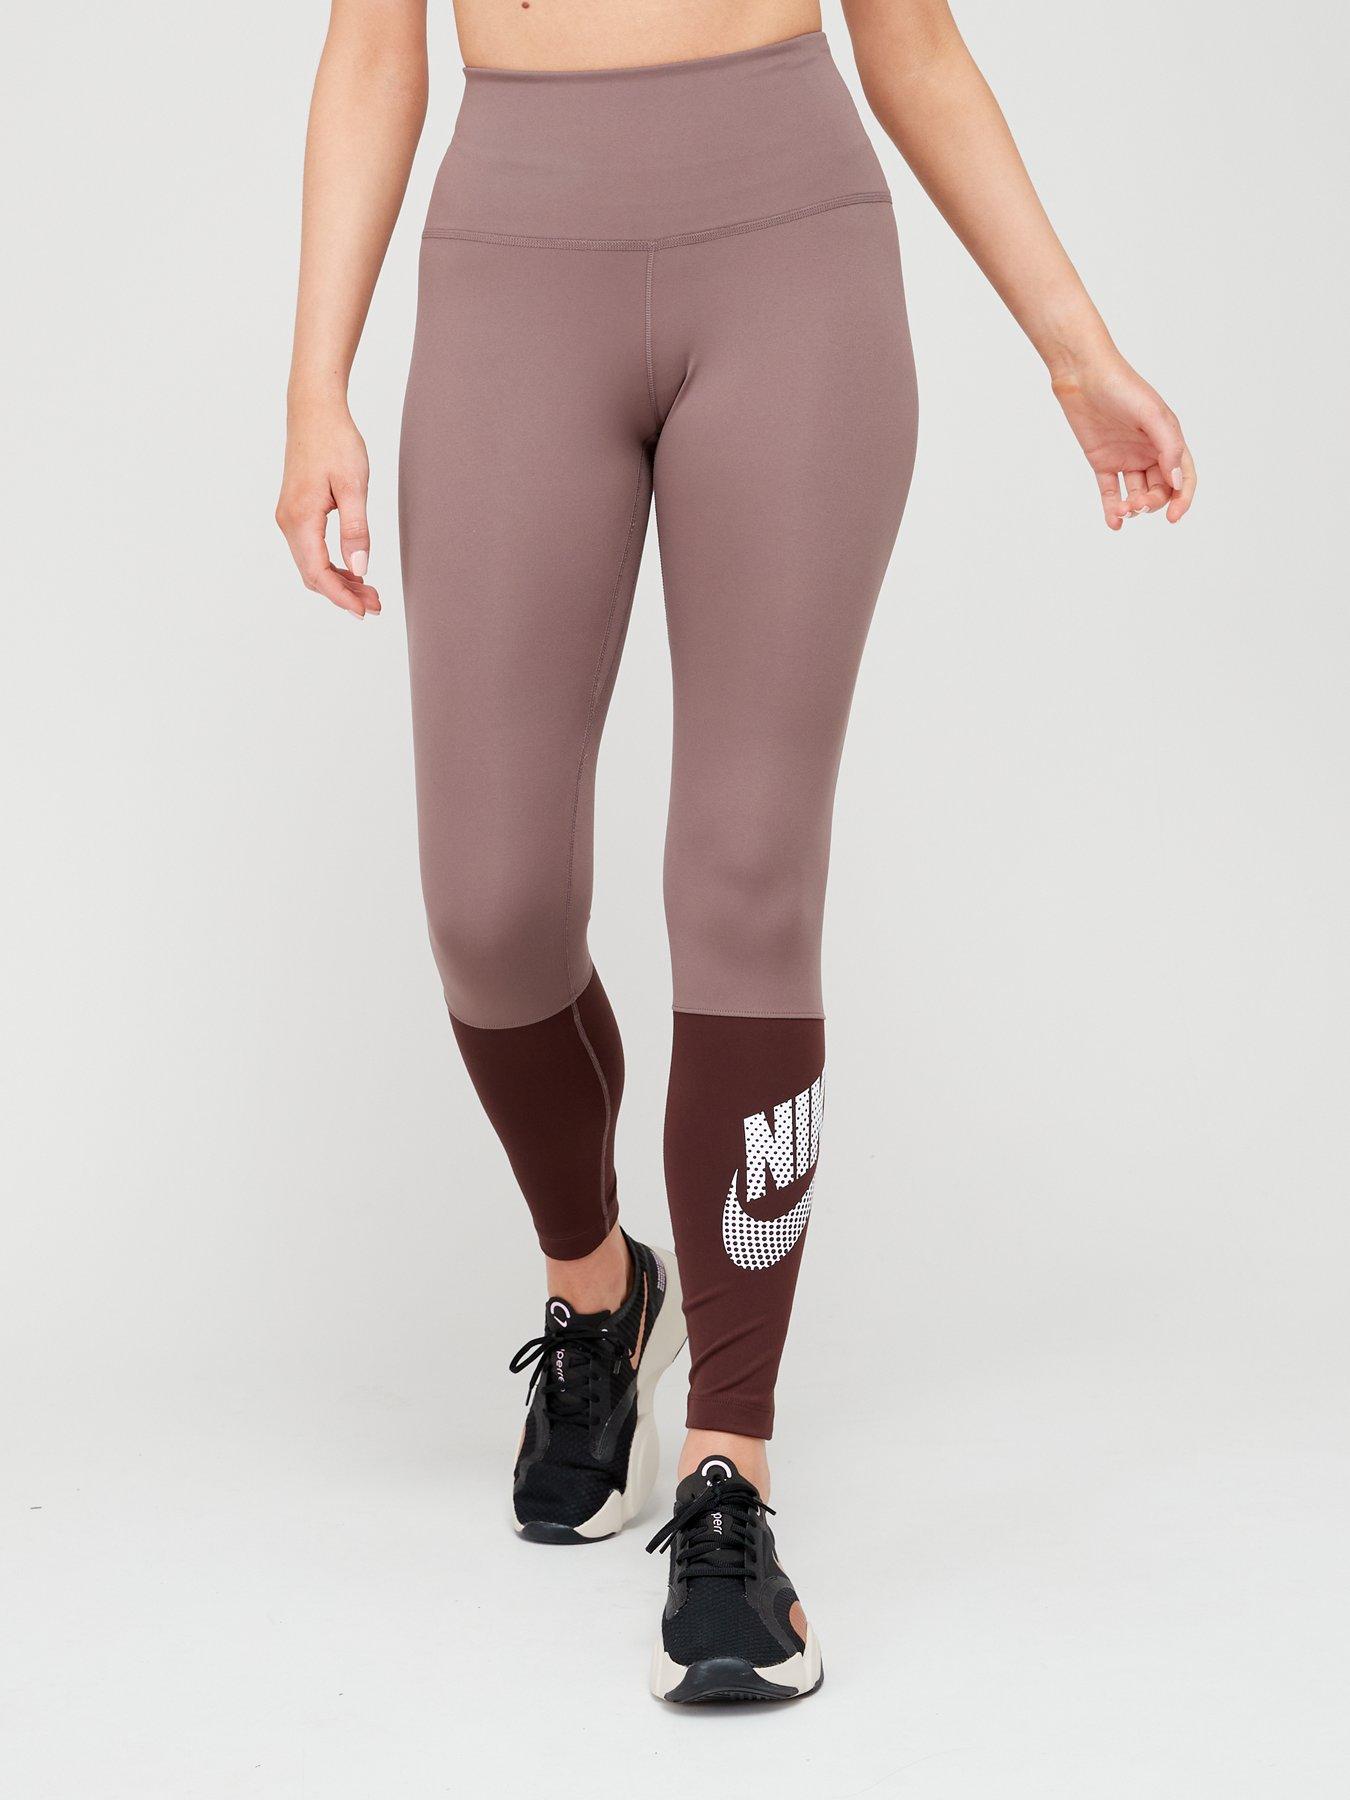 Nike Dri-FIT The One Mid Rise Leggings - Grey/White